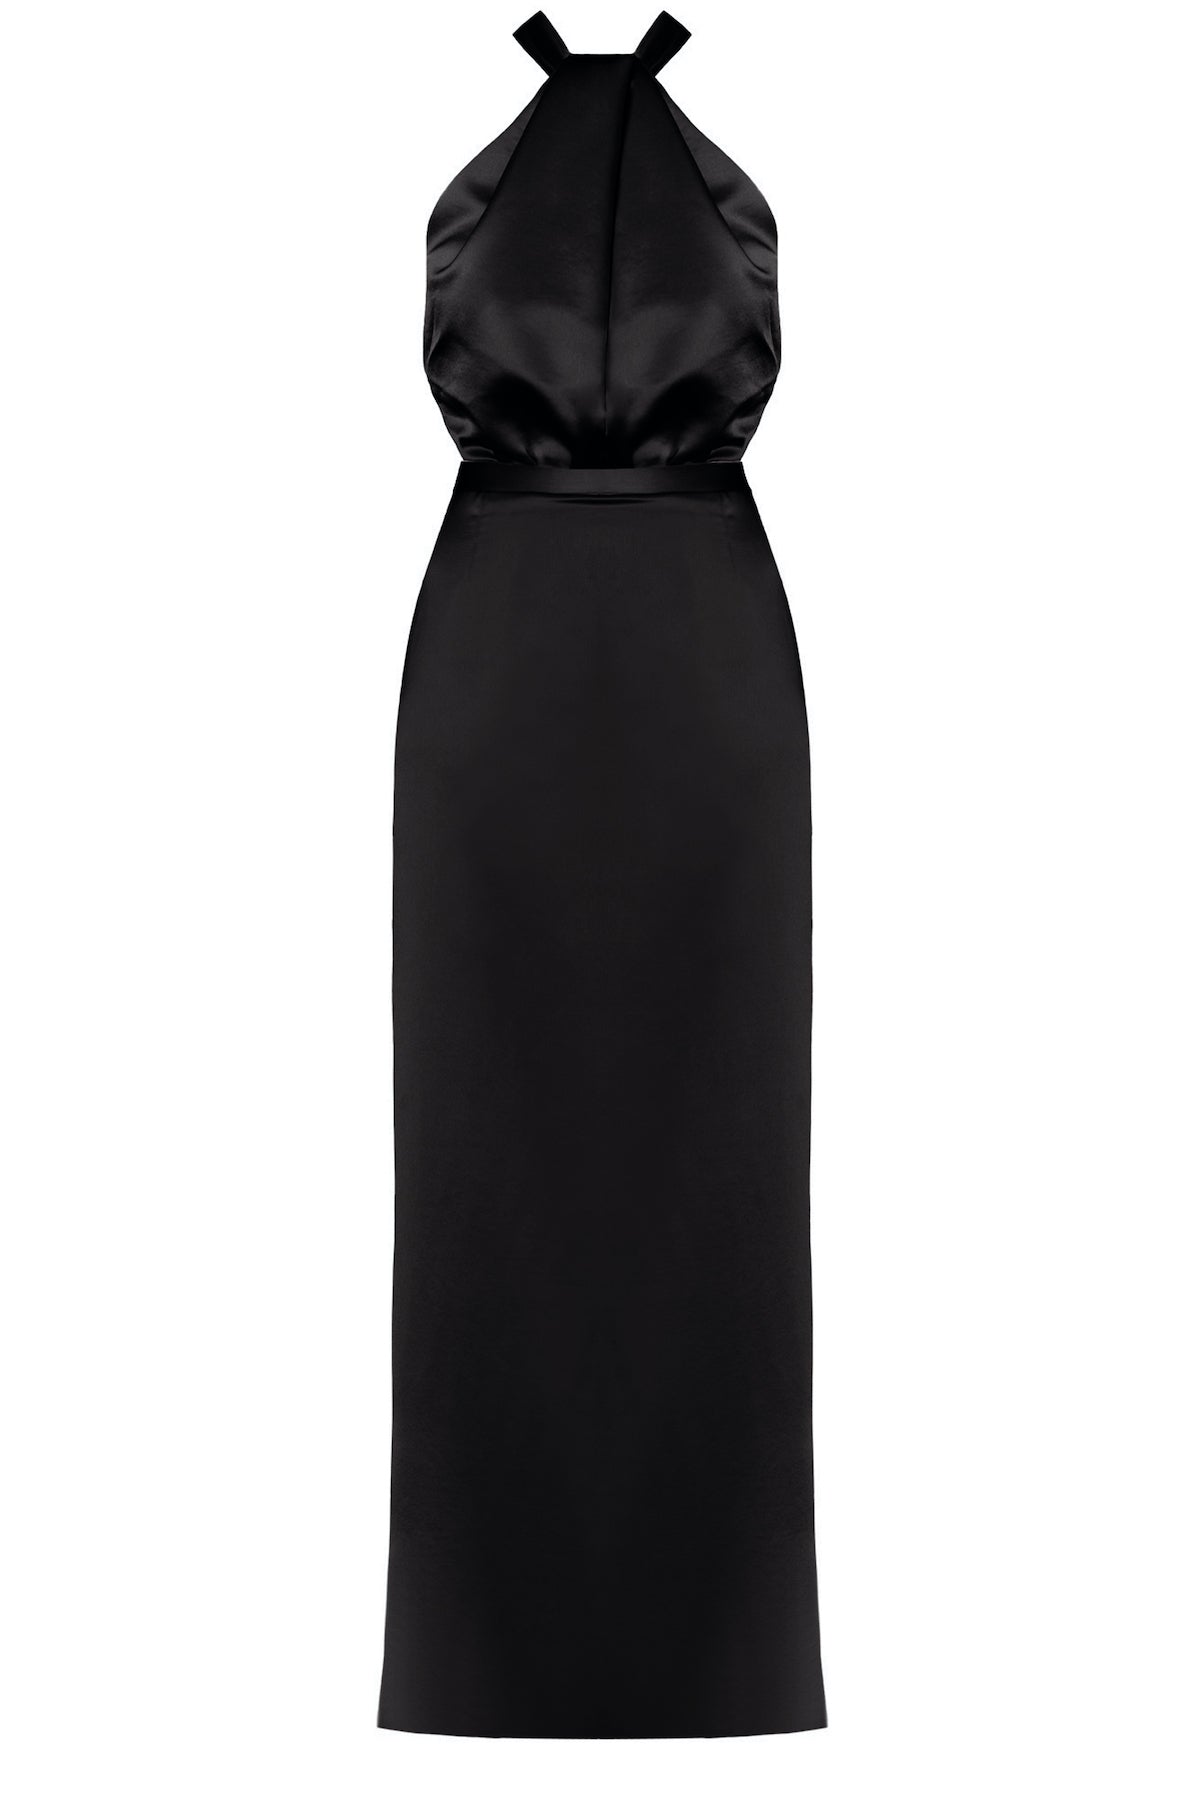 Handmade Black formal maxi dress ELONA